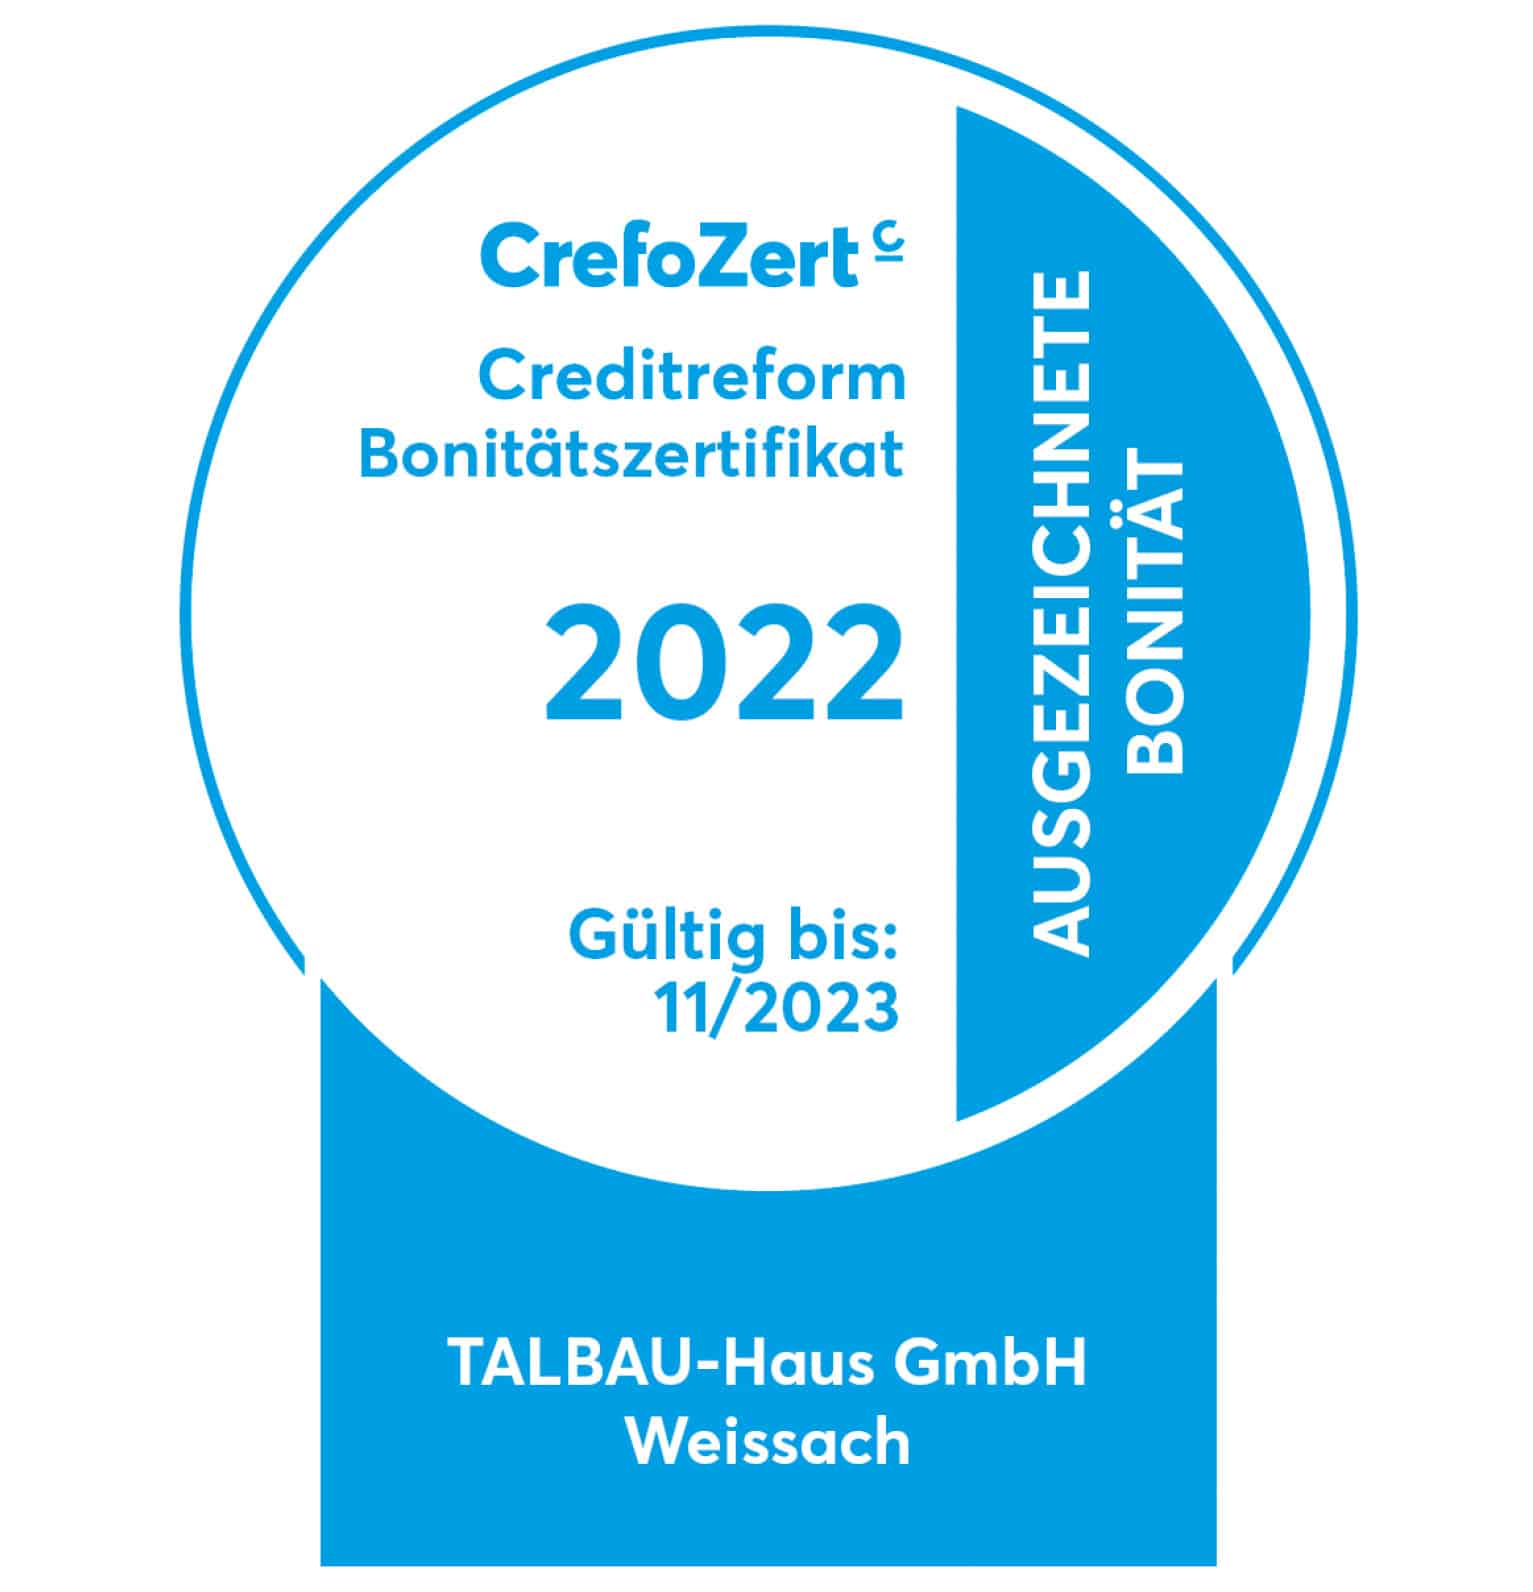 Crefo-Zert-creditreform-bonitaetszertifikat-2022-2023-talbau-haus